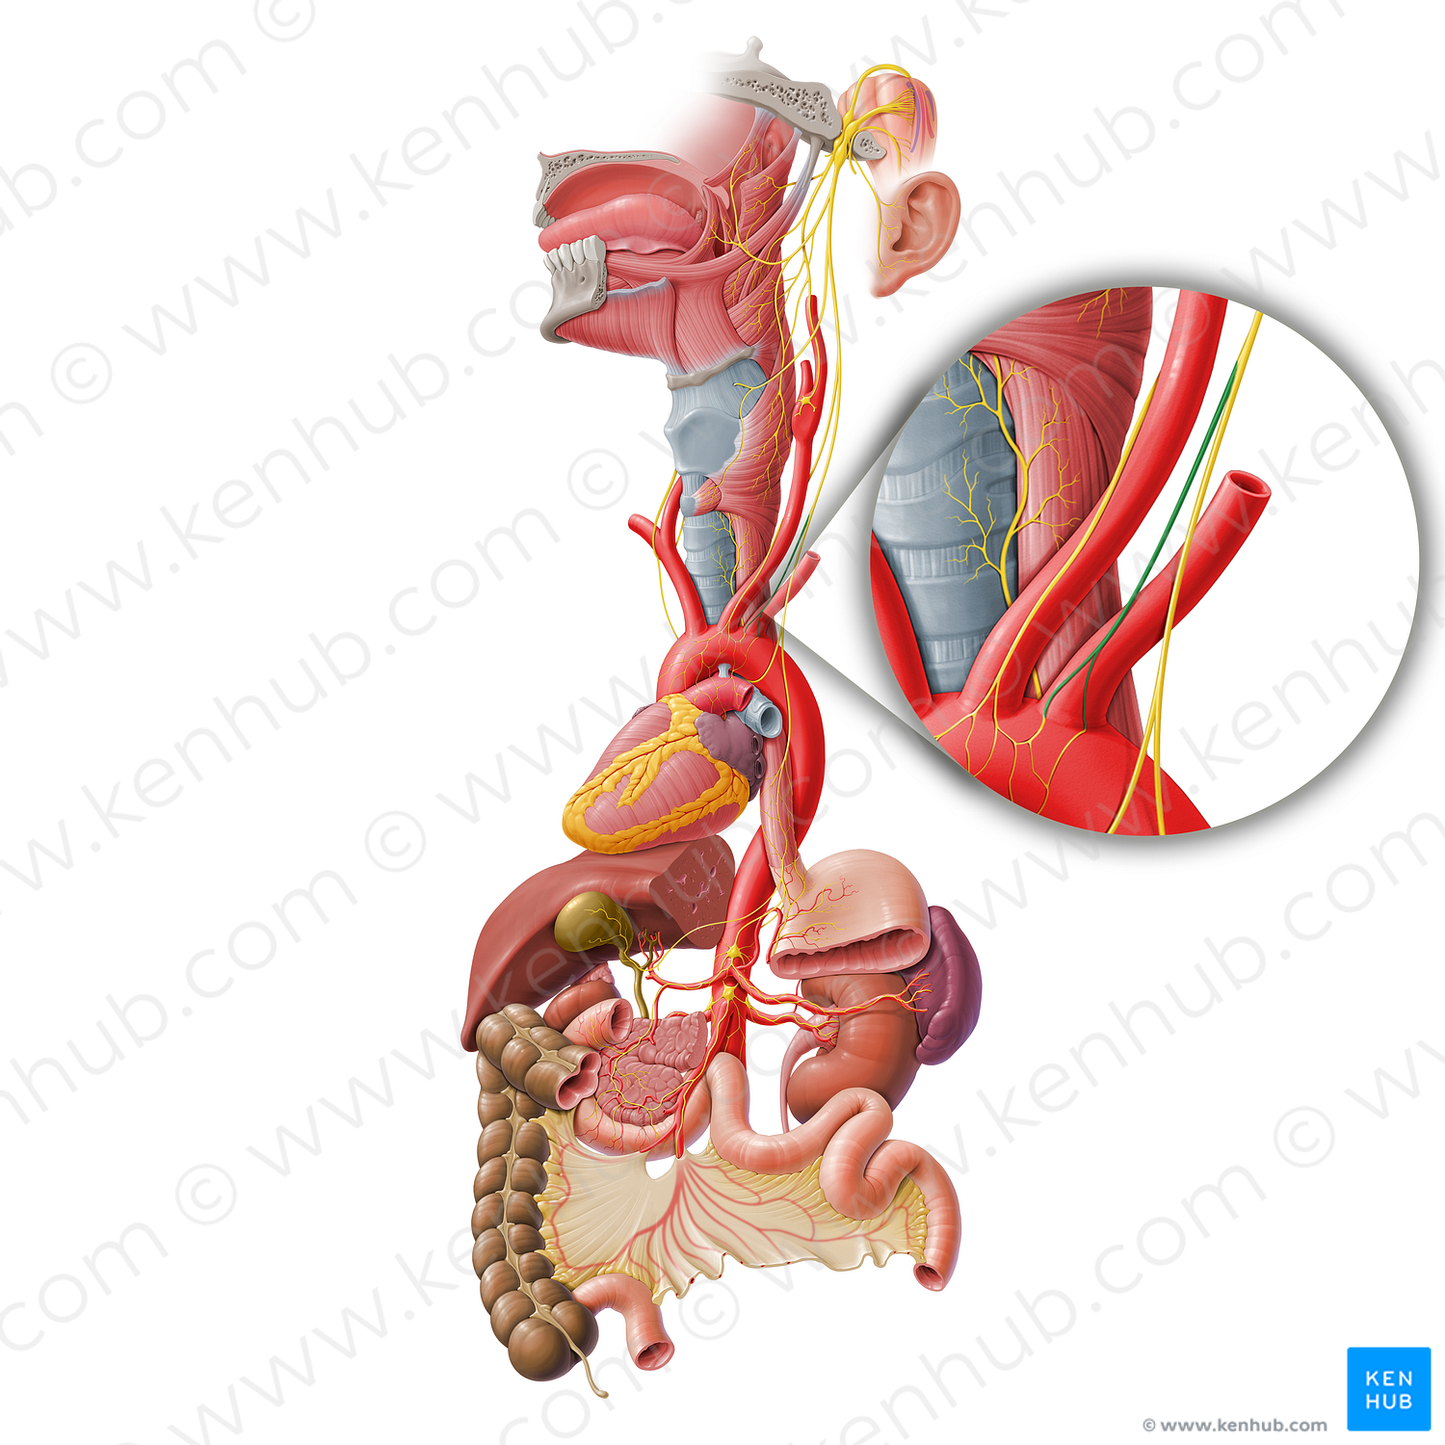 Inferior cervical cardiac branch of vagus nerve (#6351)